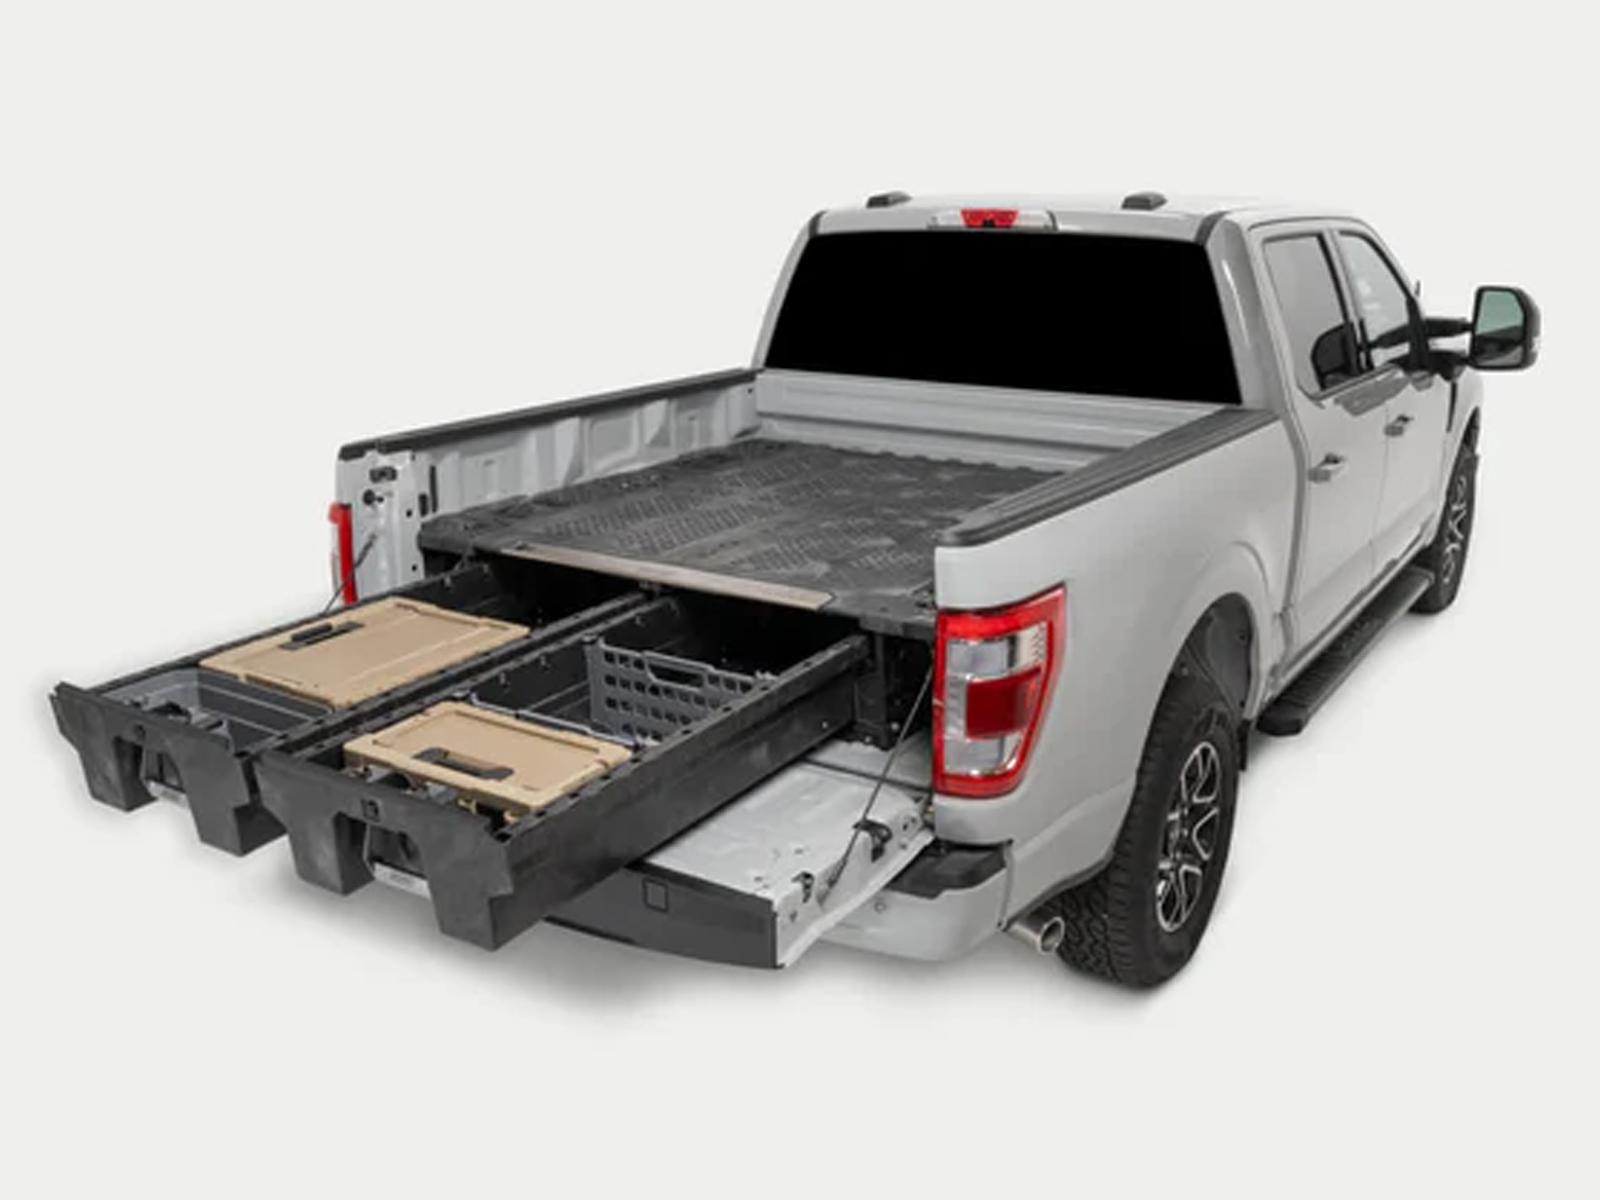 Durable Truck Bed Slides for Easy Cargo Handling | RealTruck